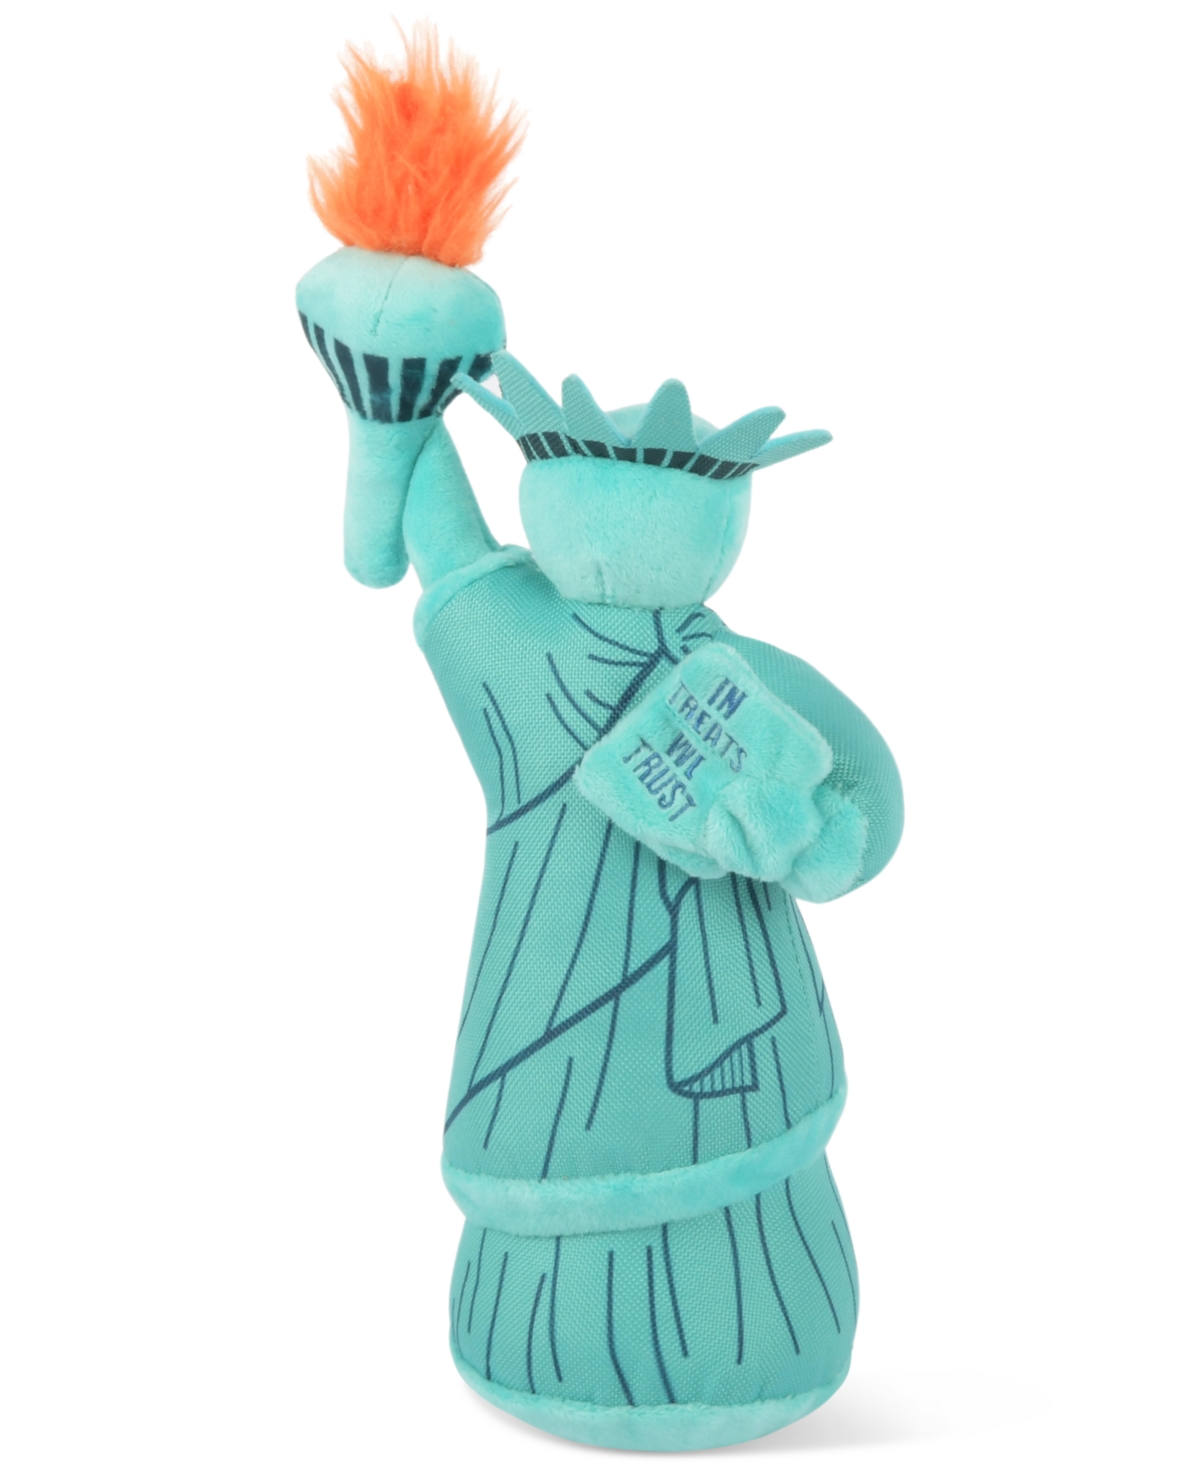 Statue of Liberty Large Plush Dog Toy - Blue